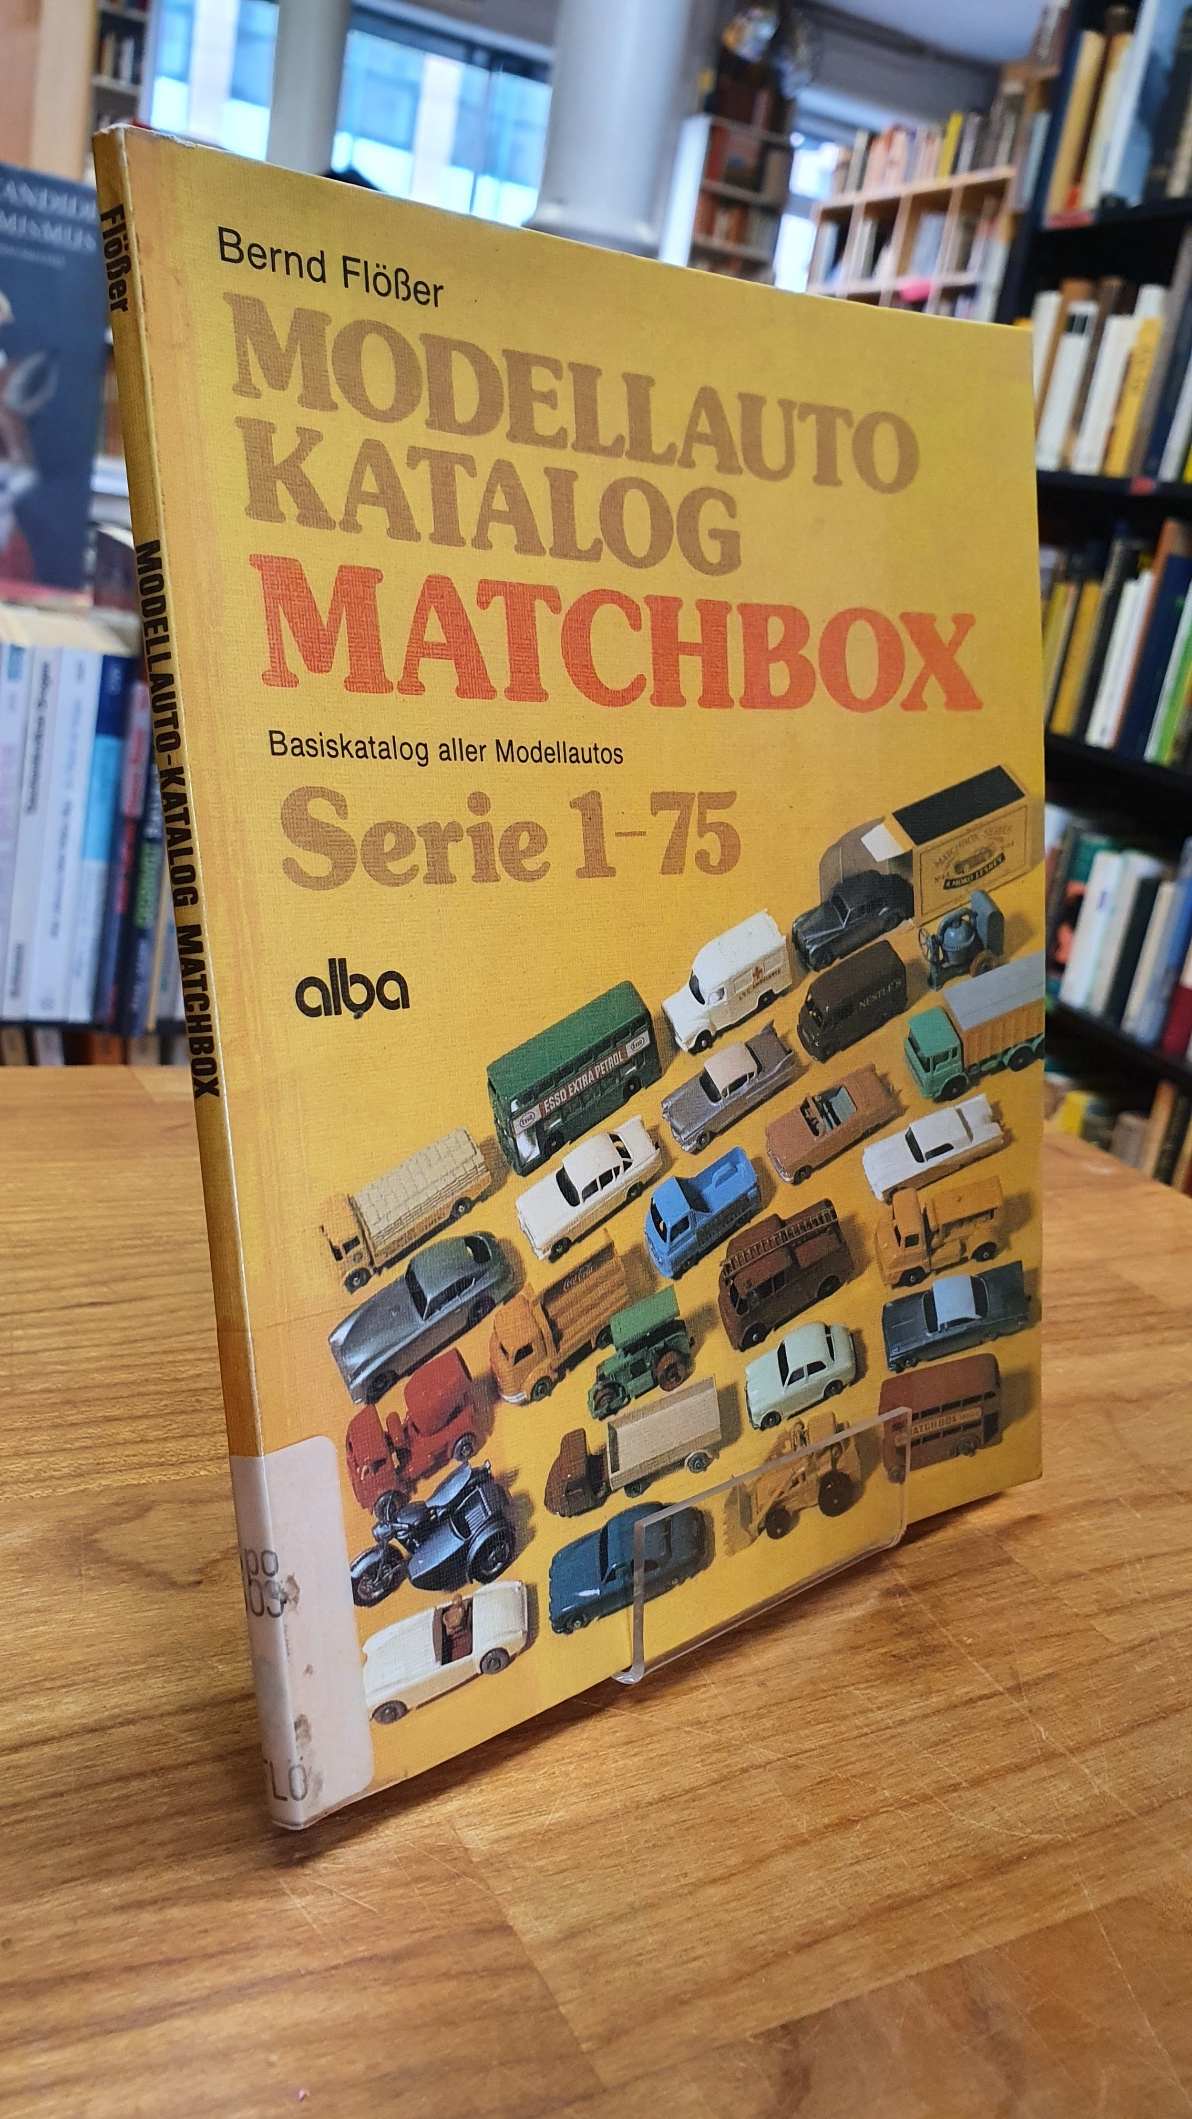 Flößer, Modellauto-Katalog Matchbox,